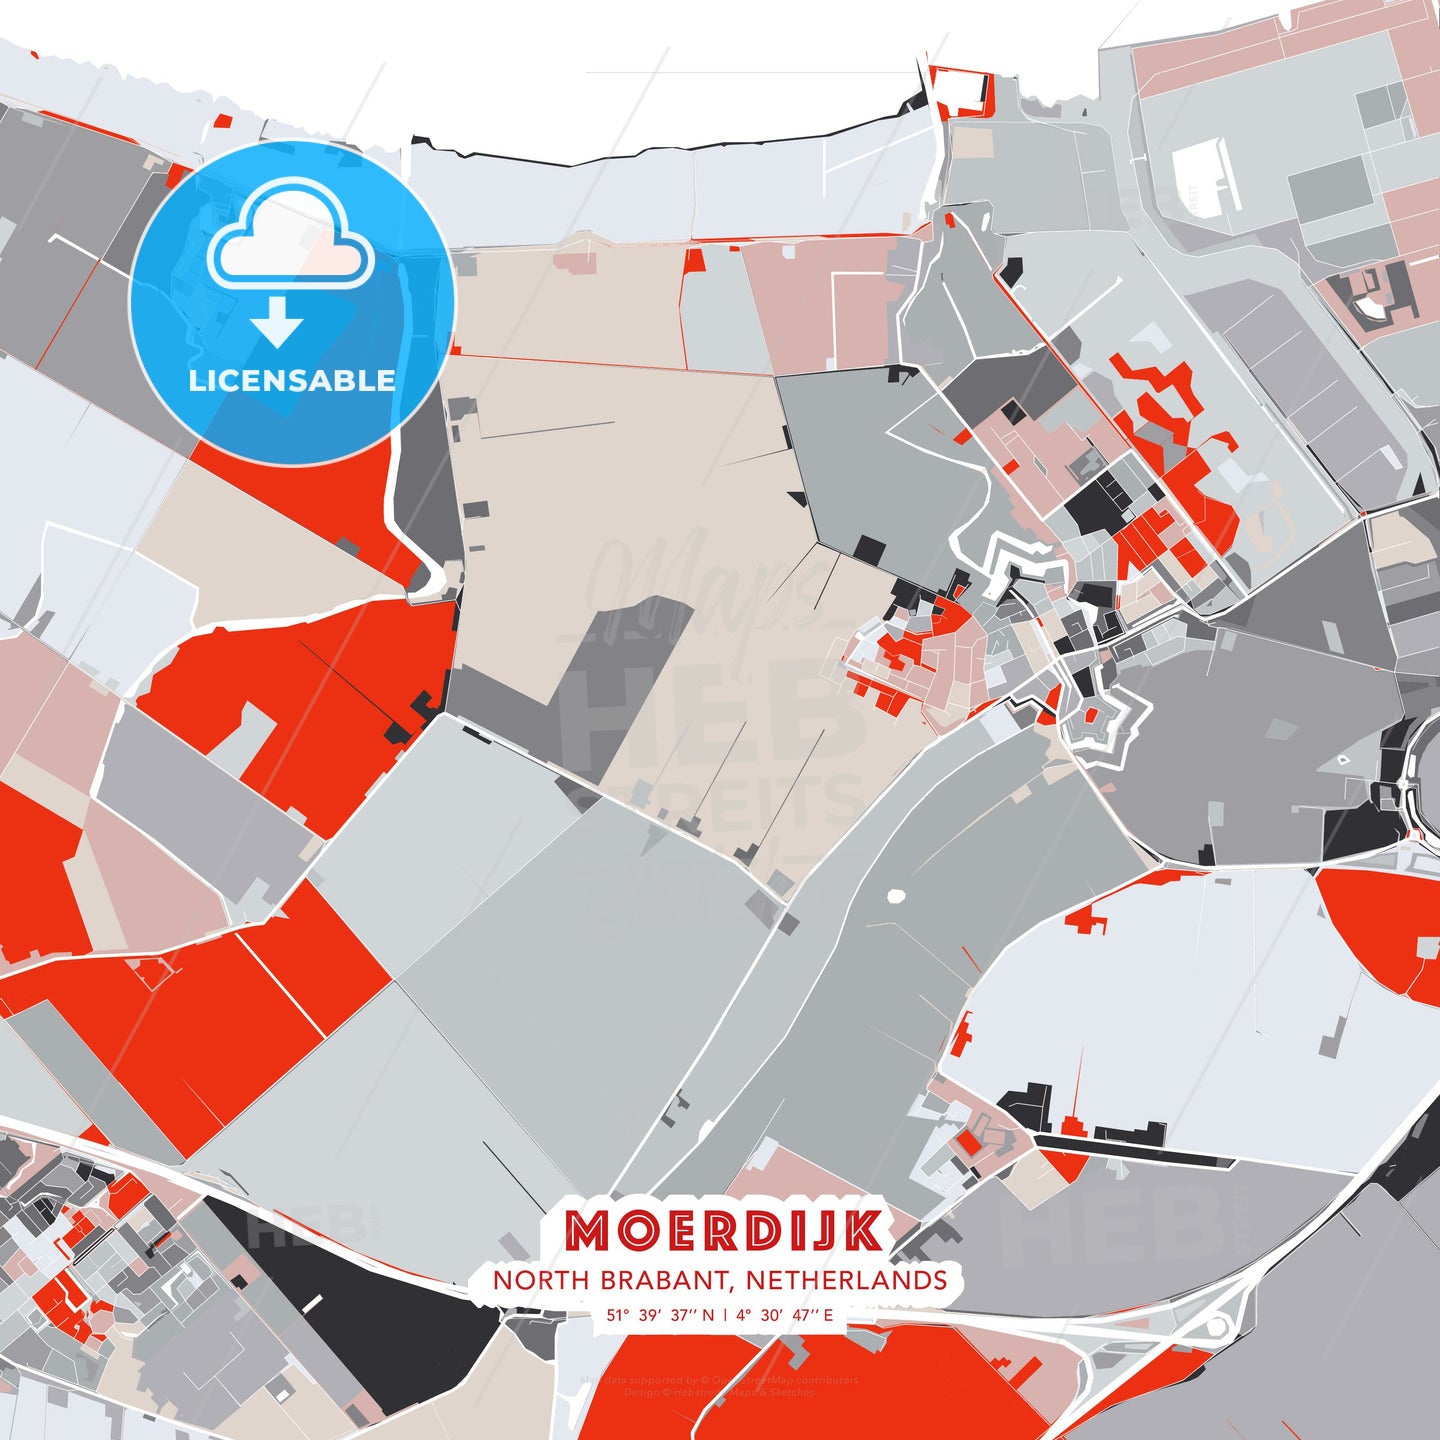 Moerdijk, North Brabant, Netherlands, modern map - HEBSTREITS Sketches